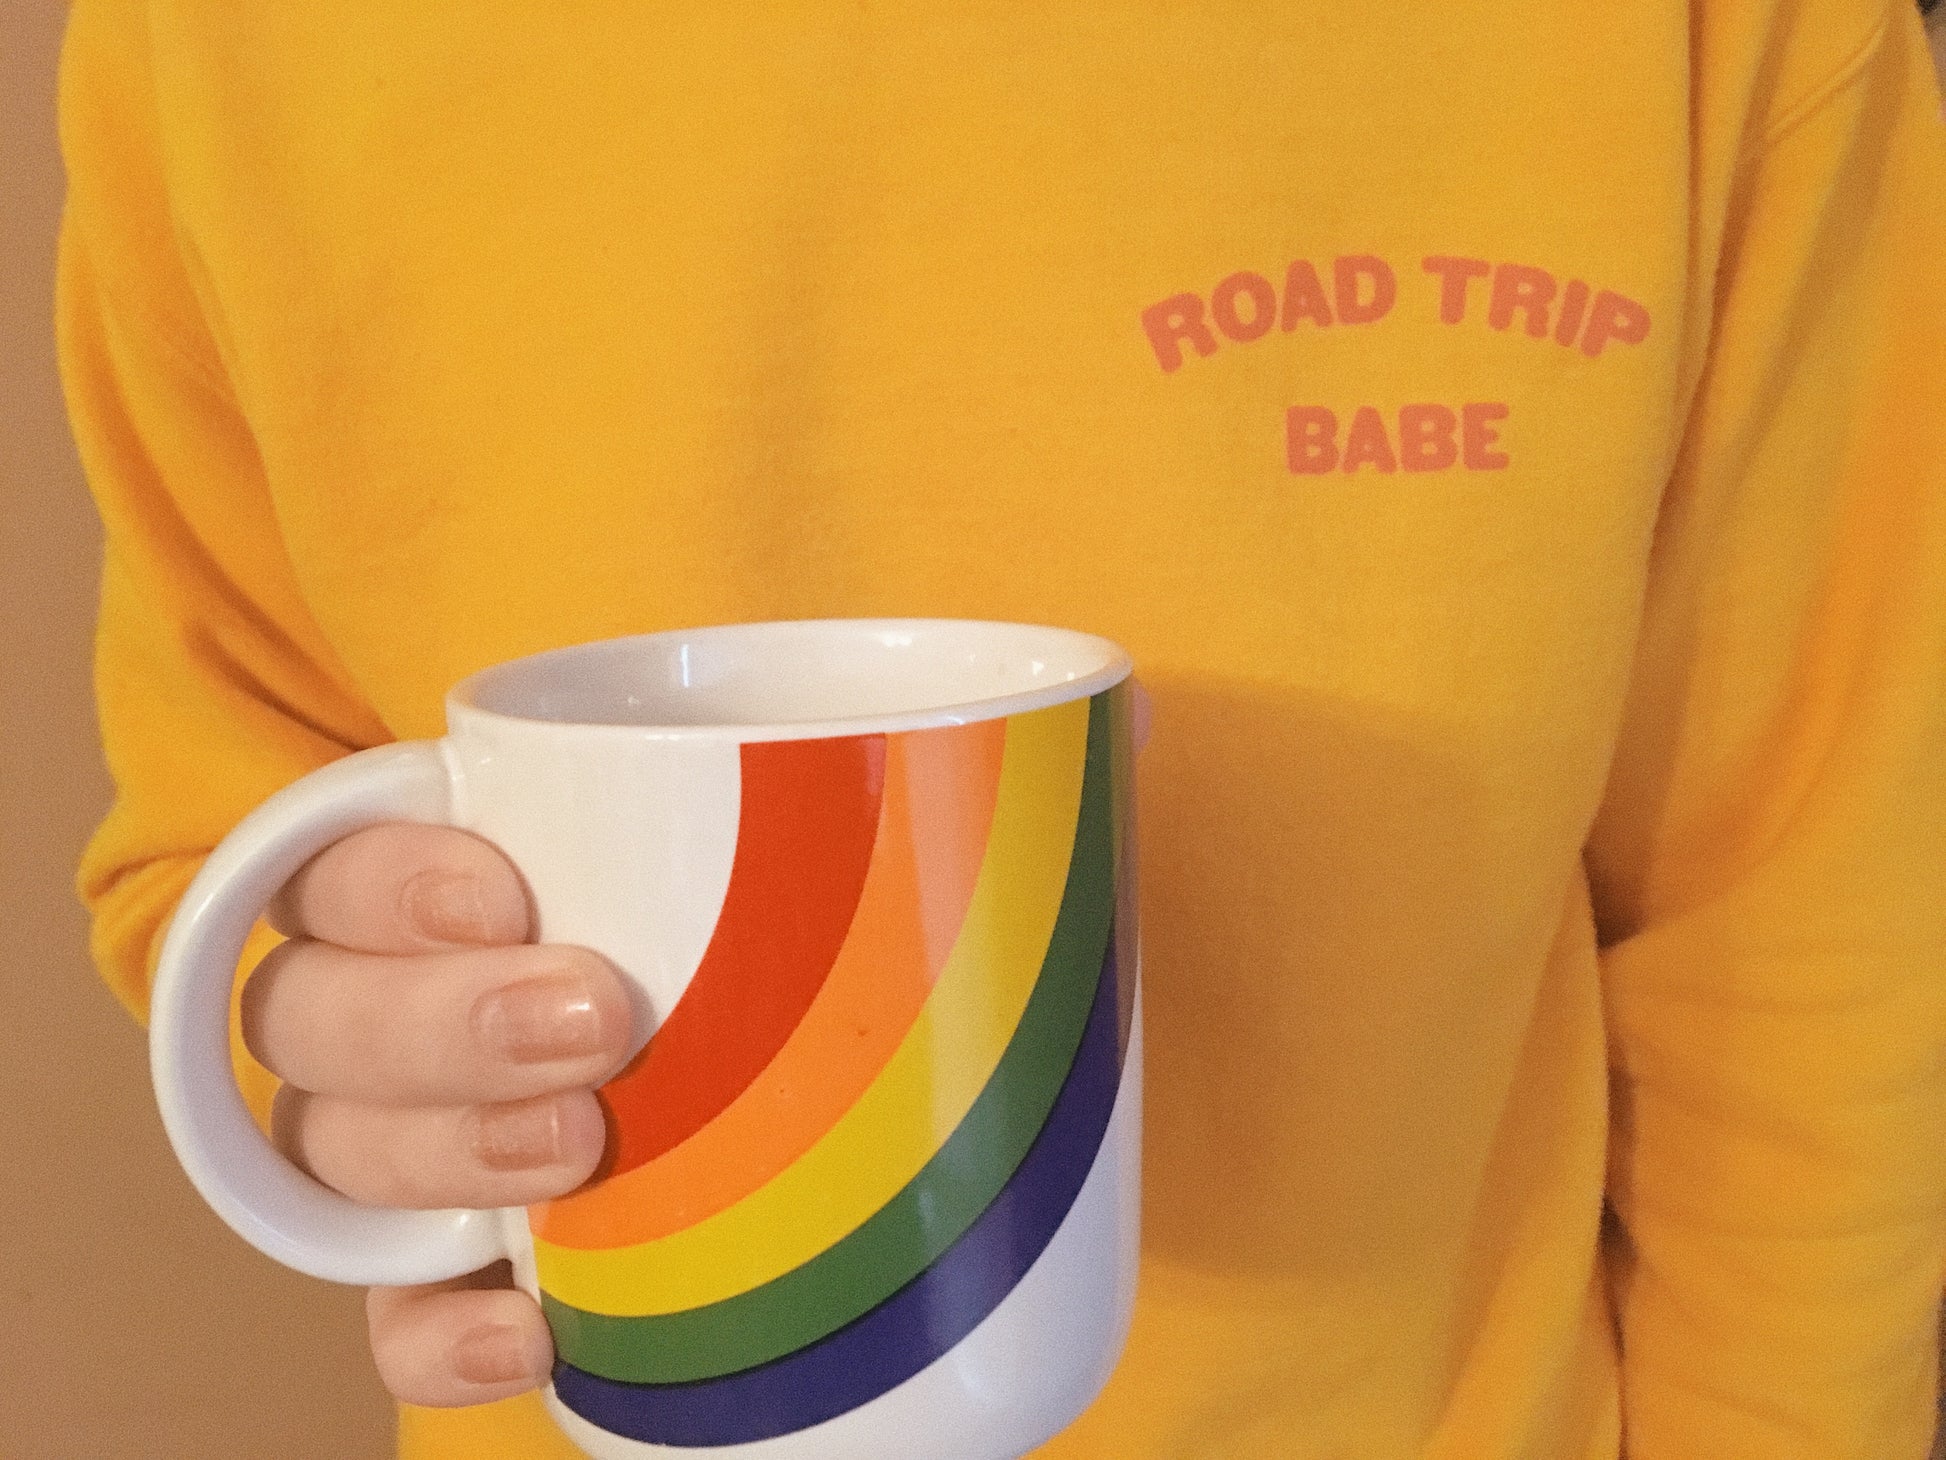  sweatshirt - ROAD TRIP BABE SWEATSHIRT - REDWOLF